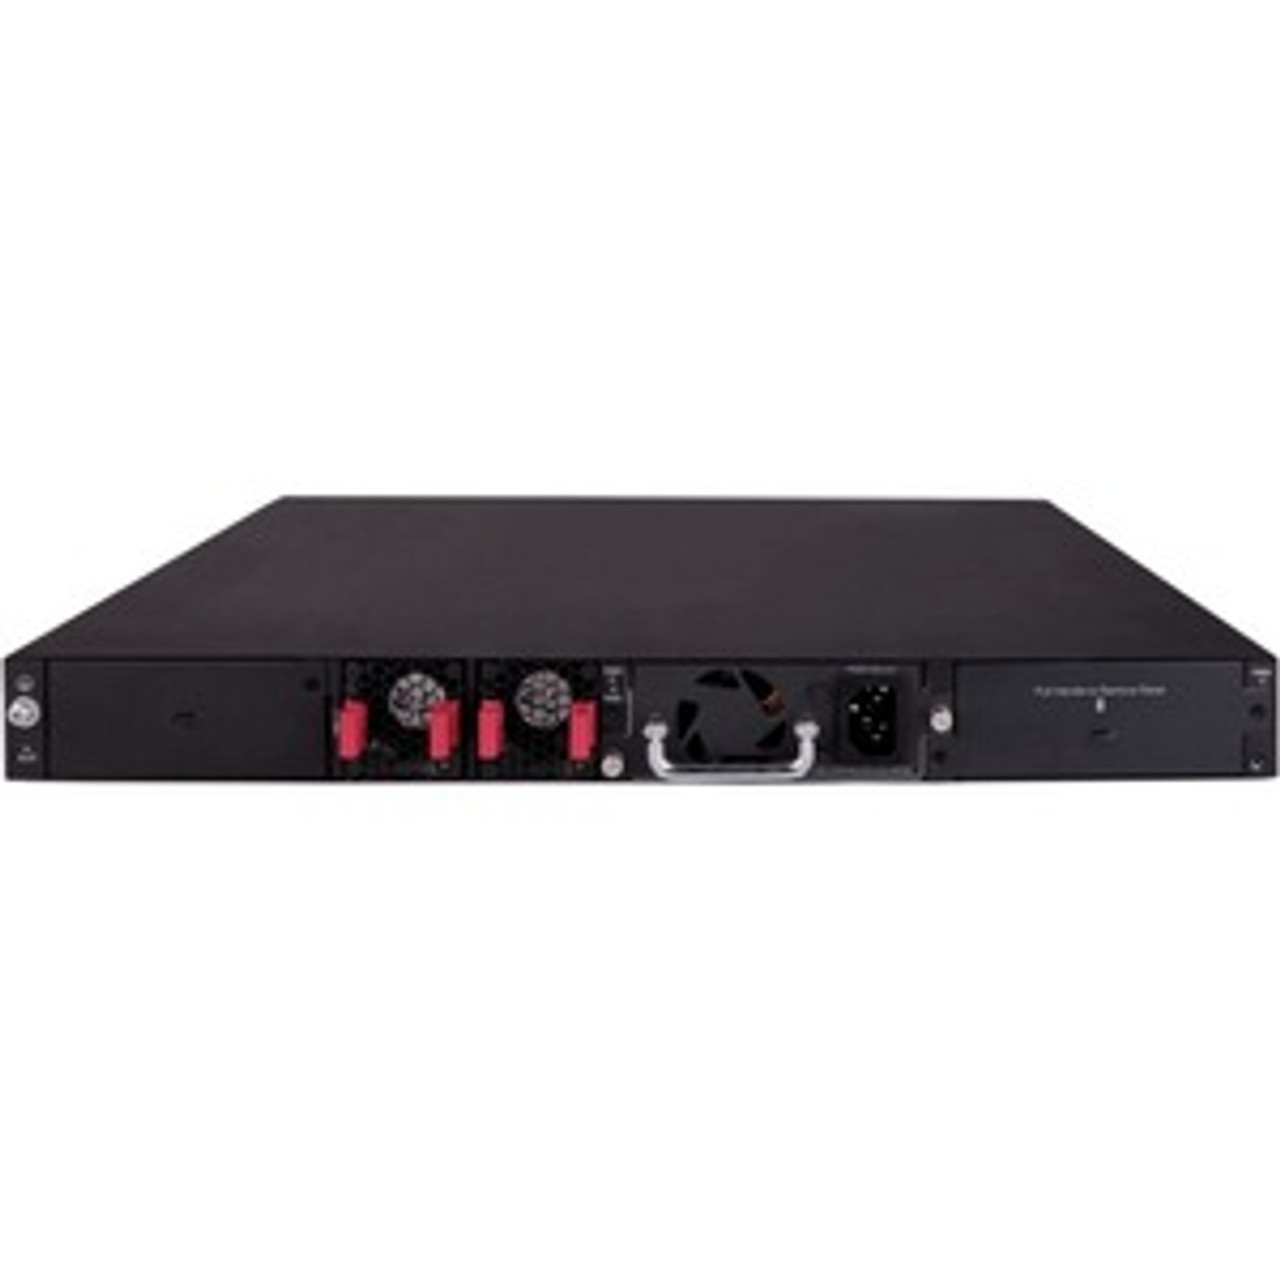 HPE FlexNetwork 5520 48G 4SFP+ HI 1-slot Switch